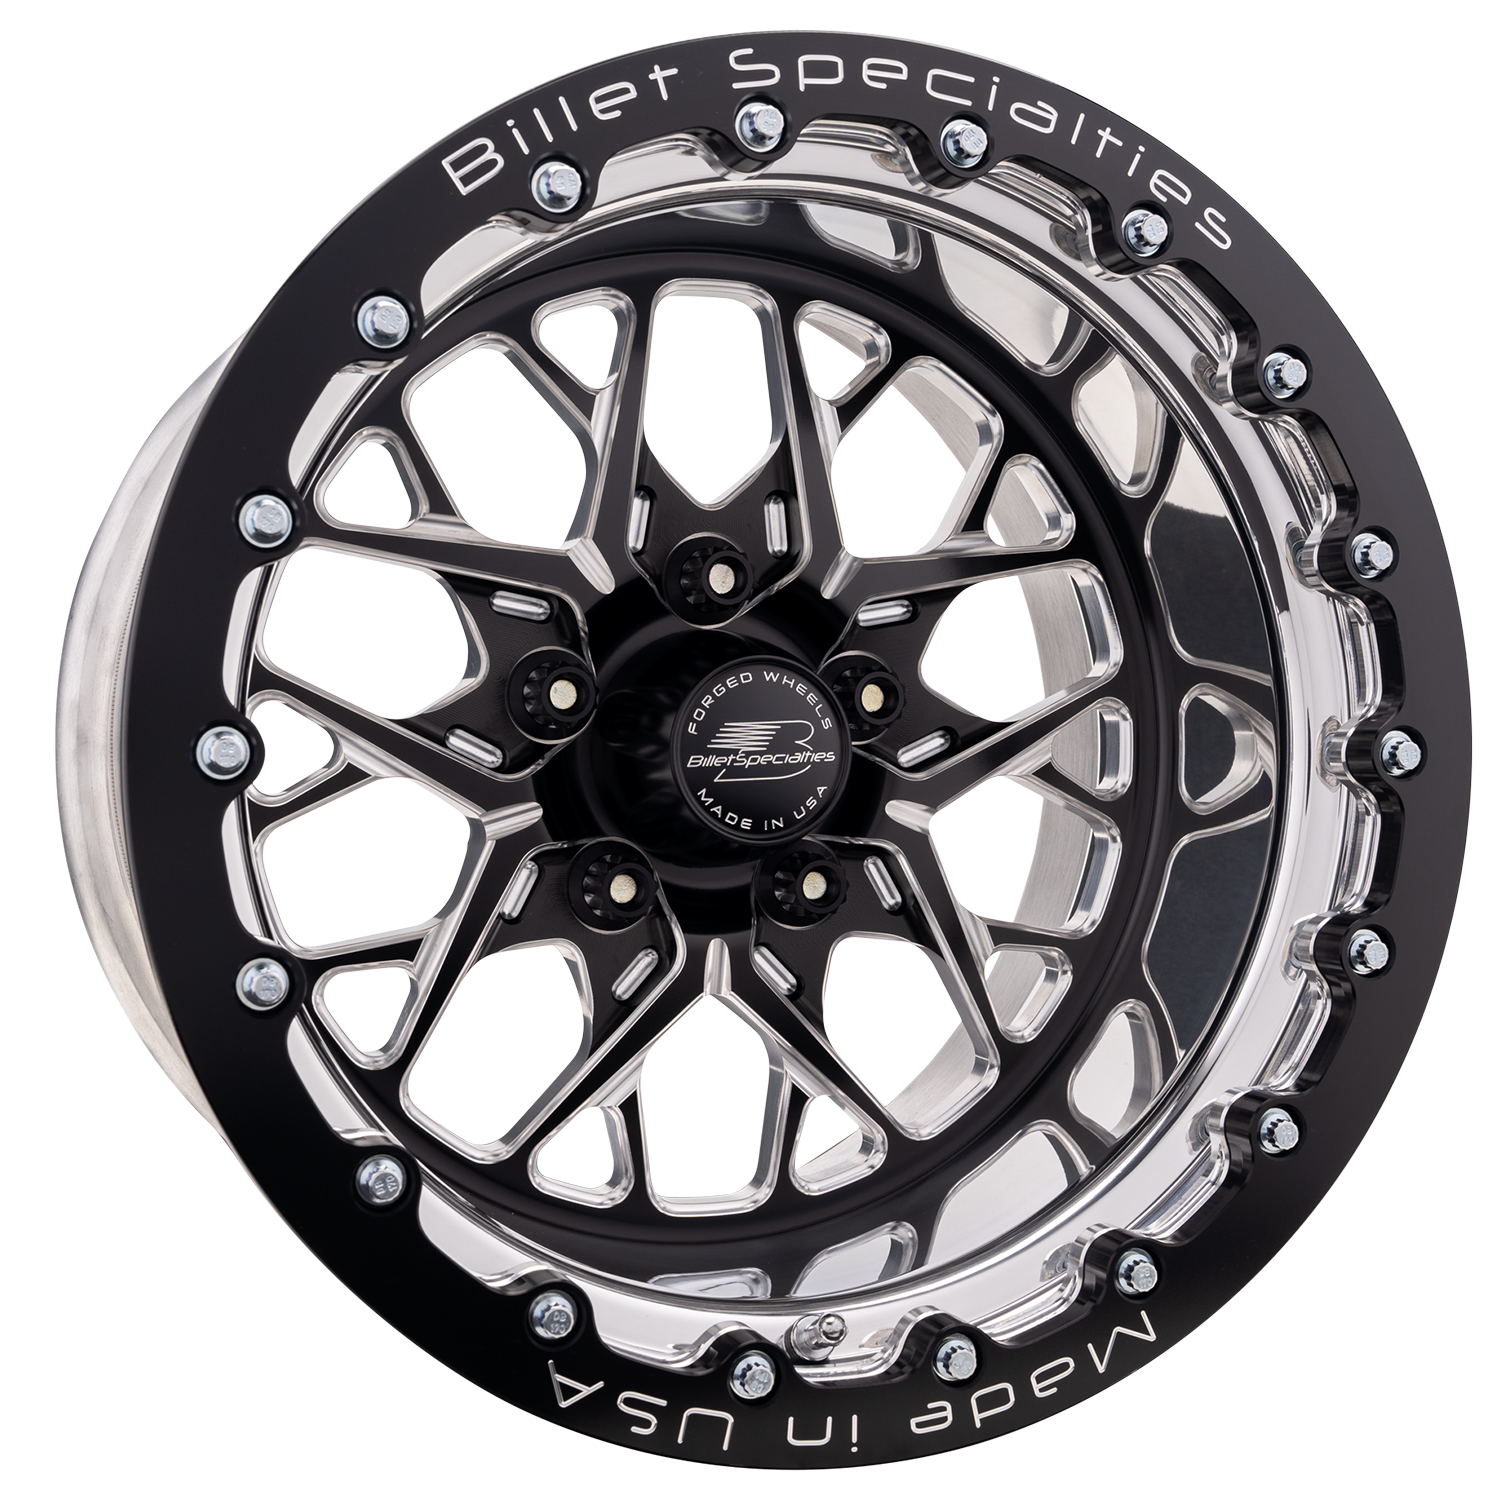 REDLINE Single-Beadlock Front Wheel, Size: 17" x 10", Bolt Pattern: 5 x 115 mm, Offset: 90 mm [Black]